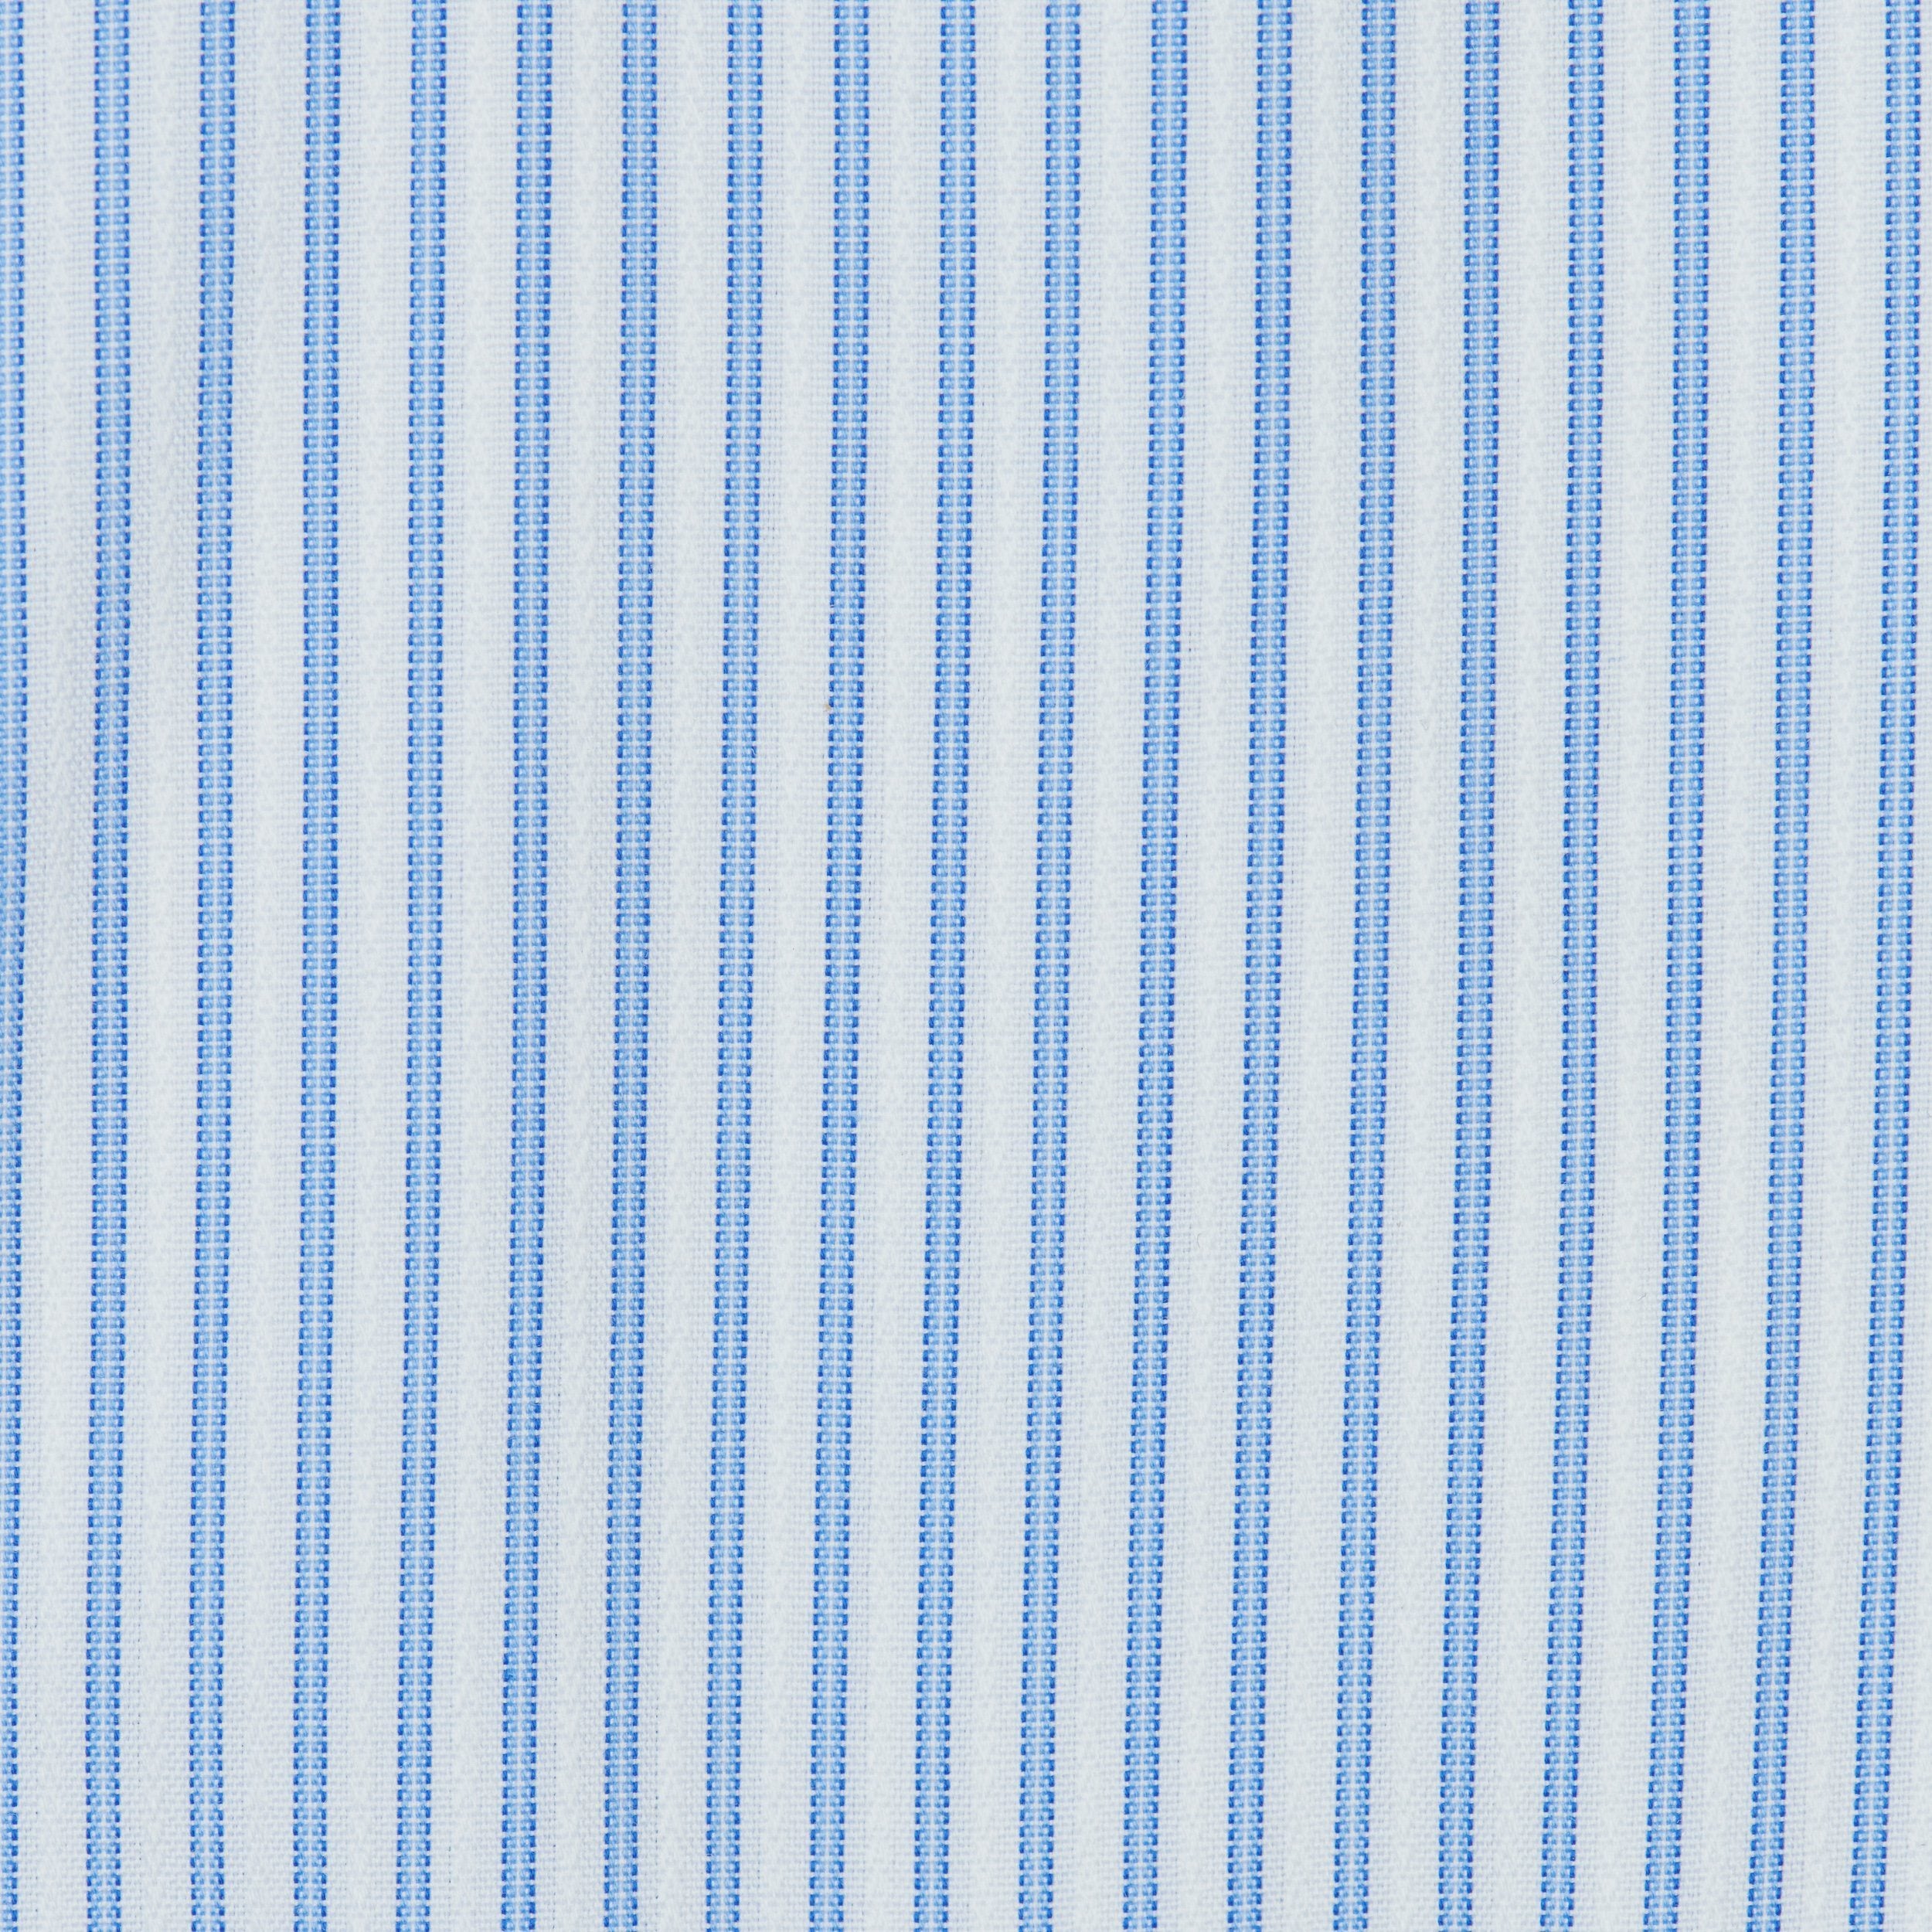 061-Blue Satin Stripe-Spread Collar-Tailor Fit Best Dress Shirt 